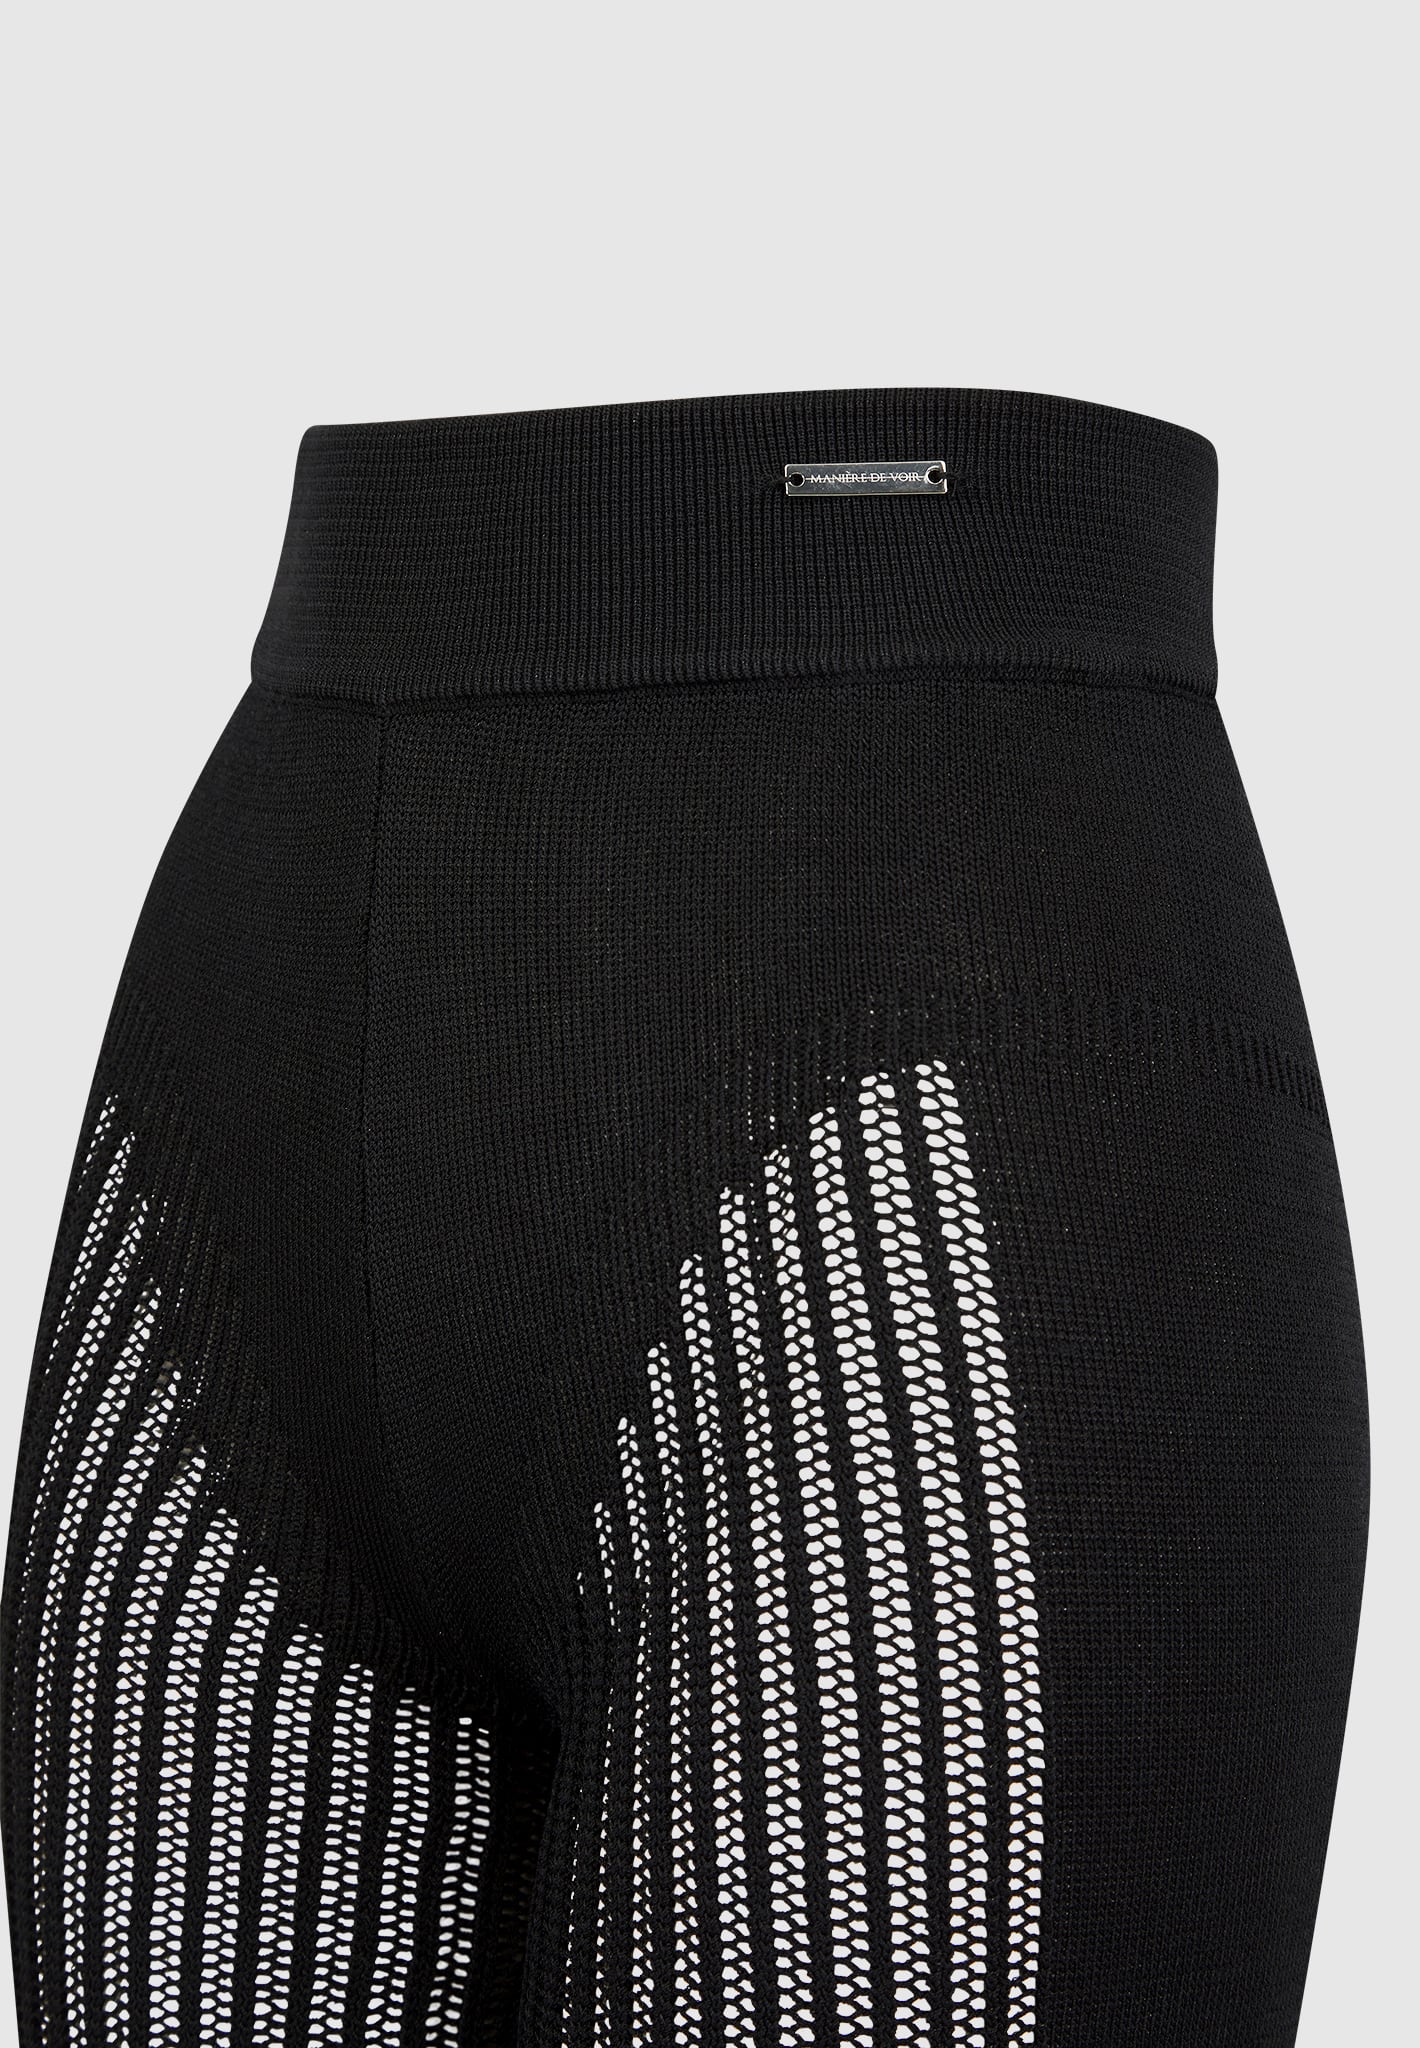 Buy ADIDAS mesh high-waist long tights Online